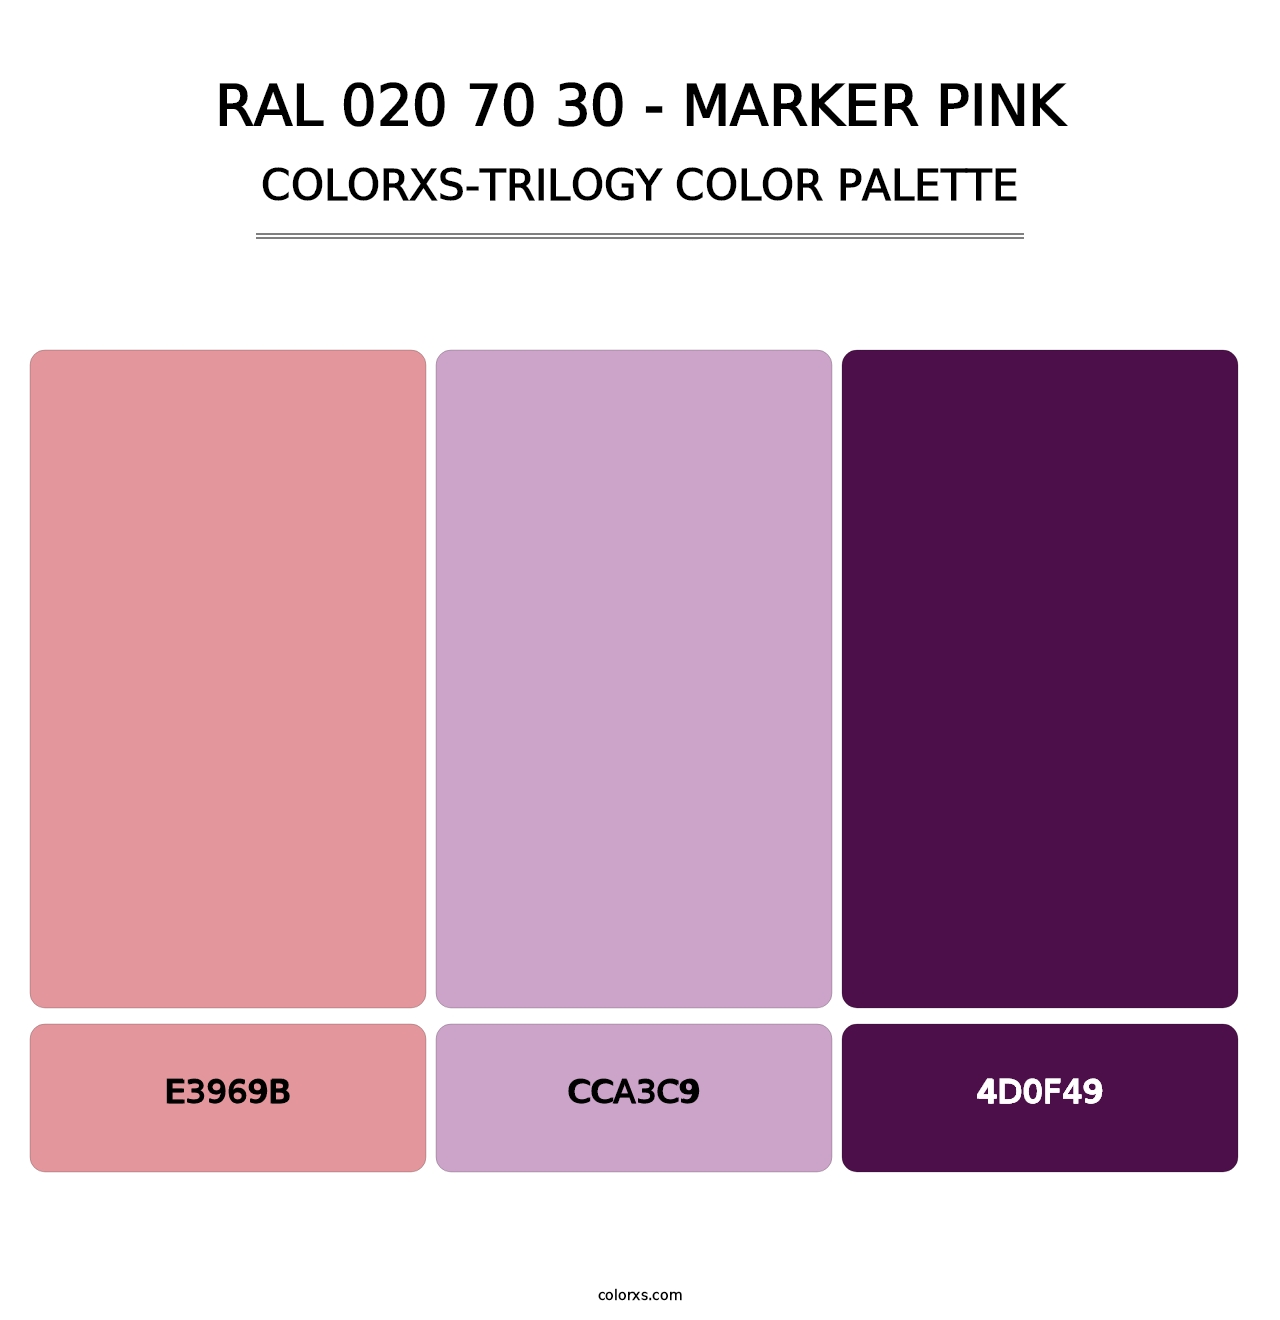 RAL 020 70 30 - Marker Pink - Colorxs Trilogy Palette